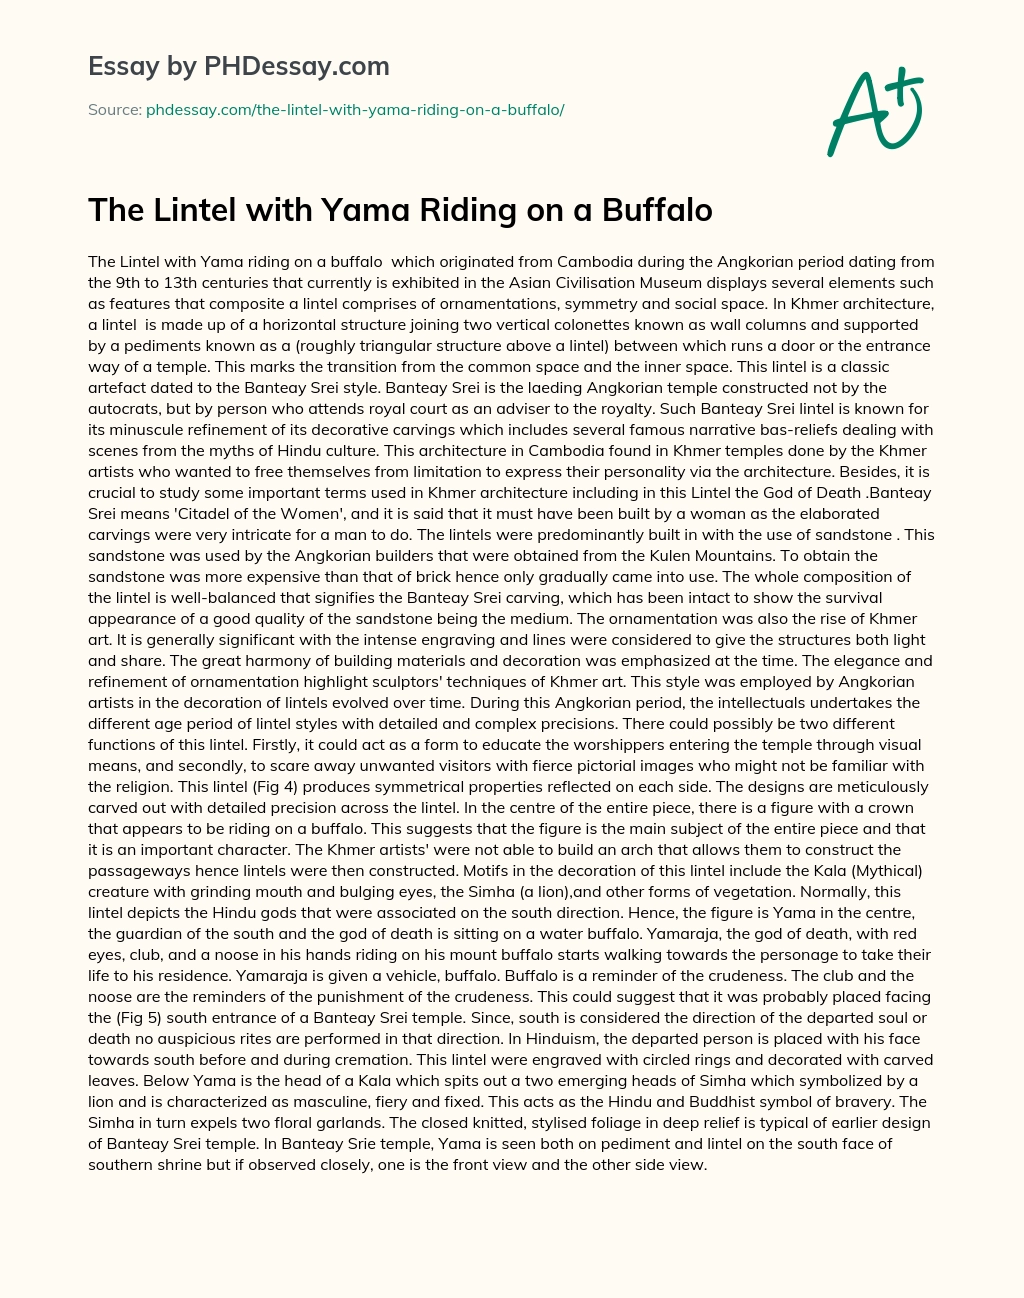 The Lintel with Yama Riding on a Buffalo  essay